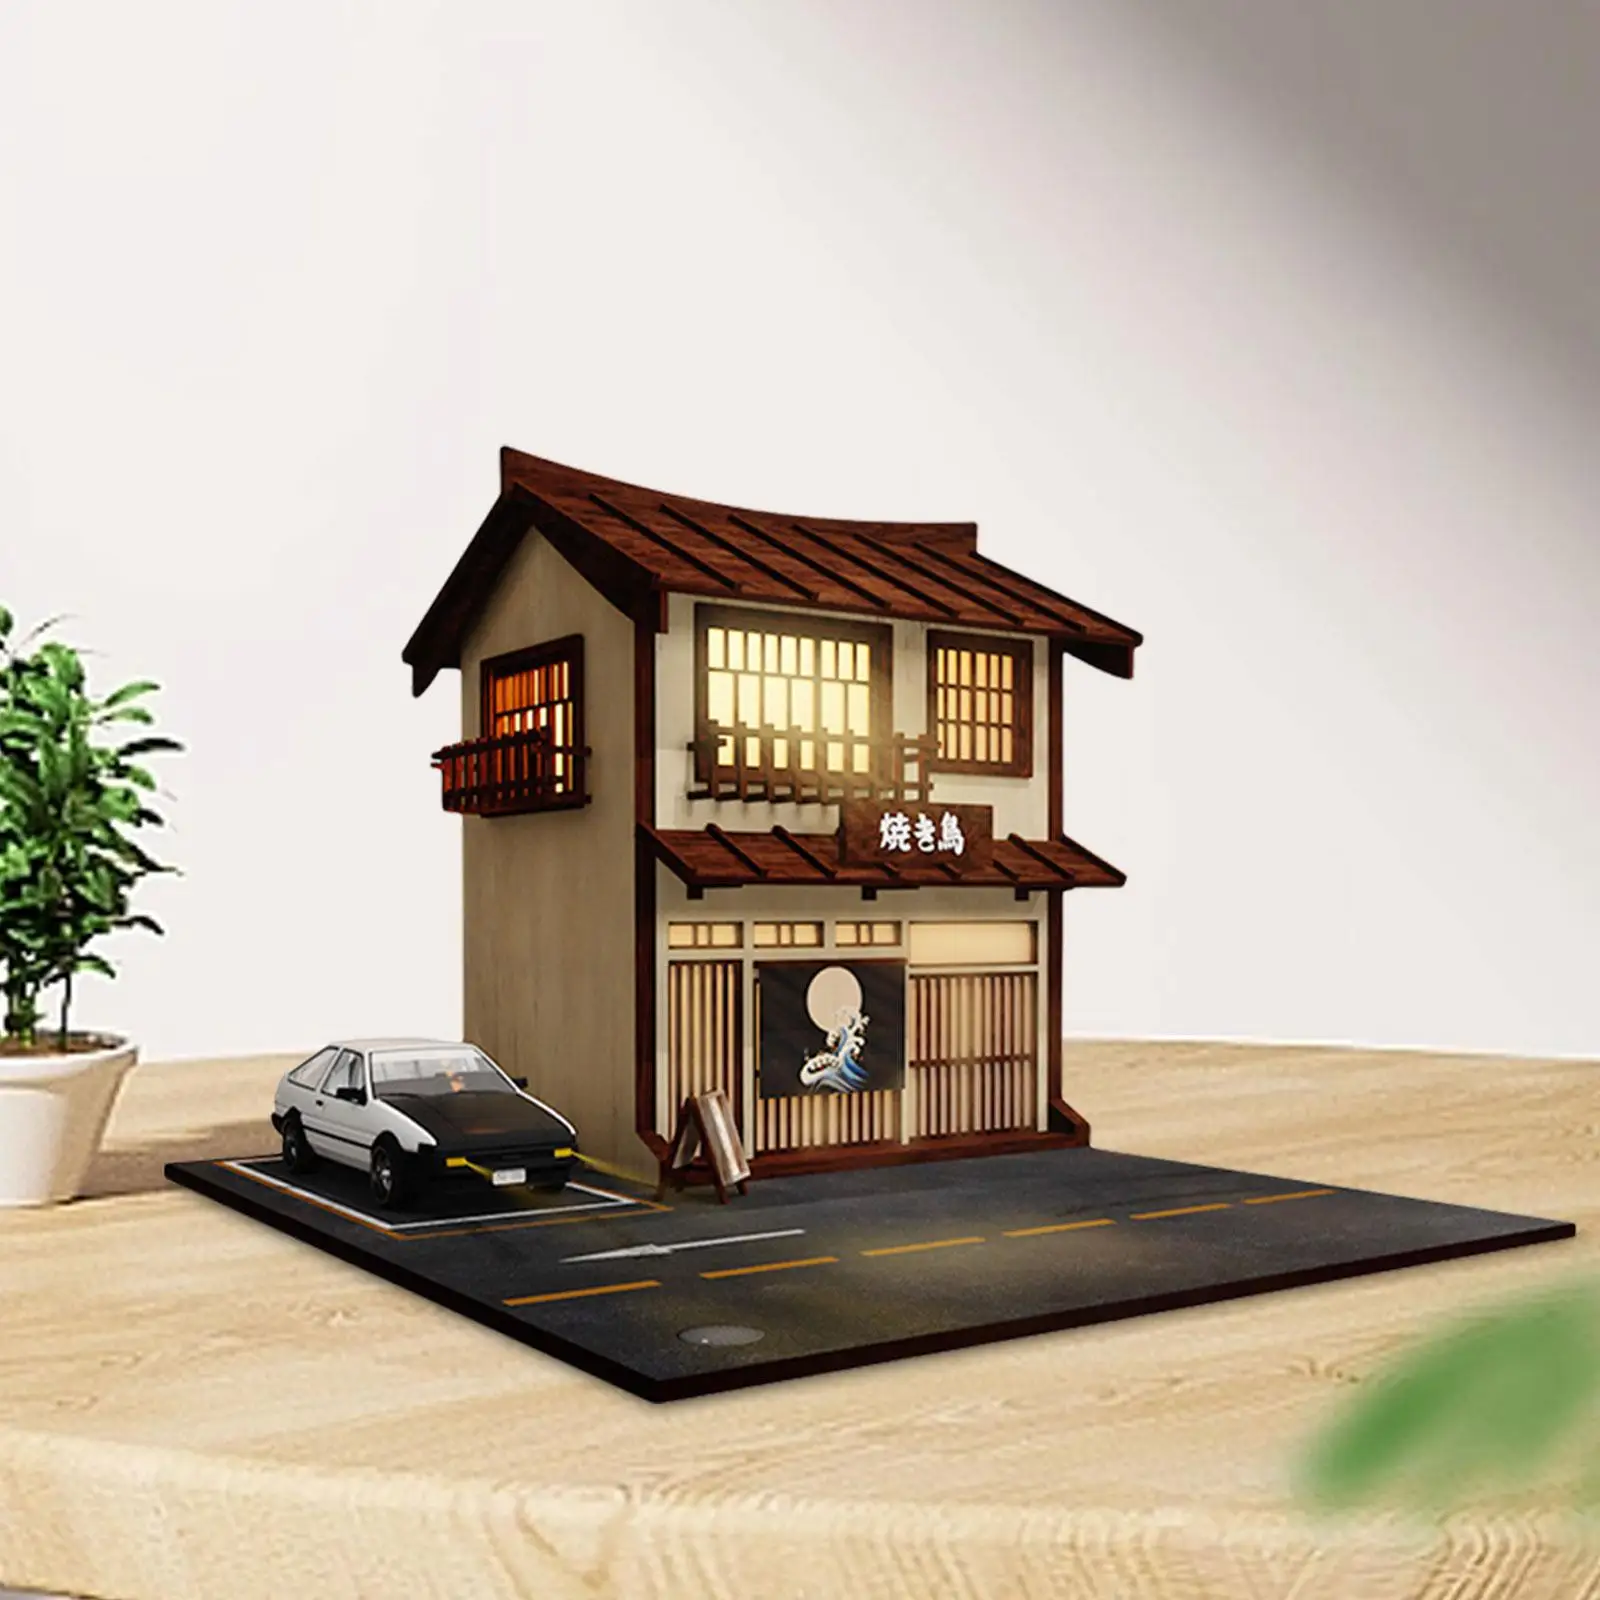 1:64 Car Garage Diorama Model for Scene Layout Props Micro Landscape DIY Scene Model Miniature Scene Layout Model Train Layout